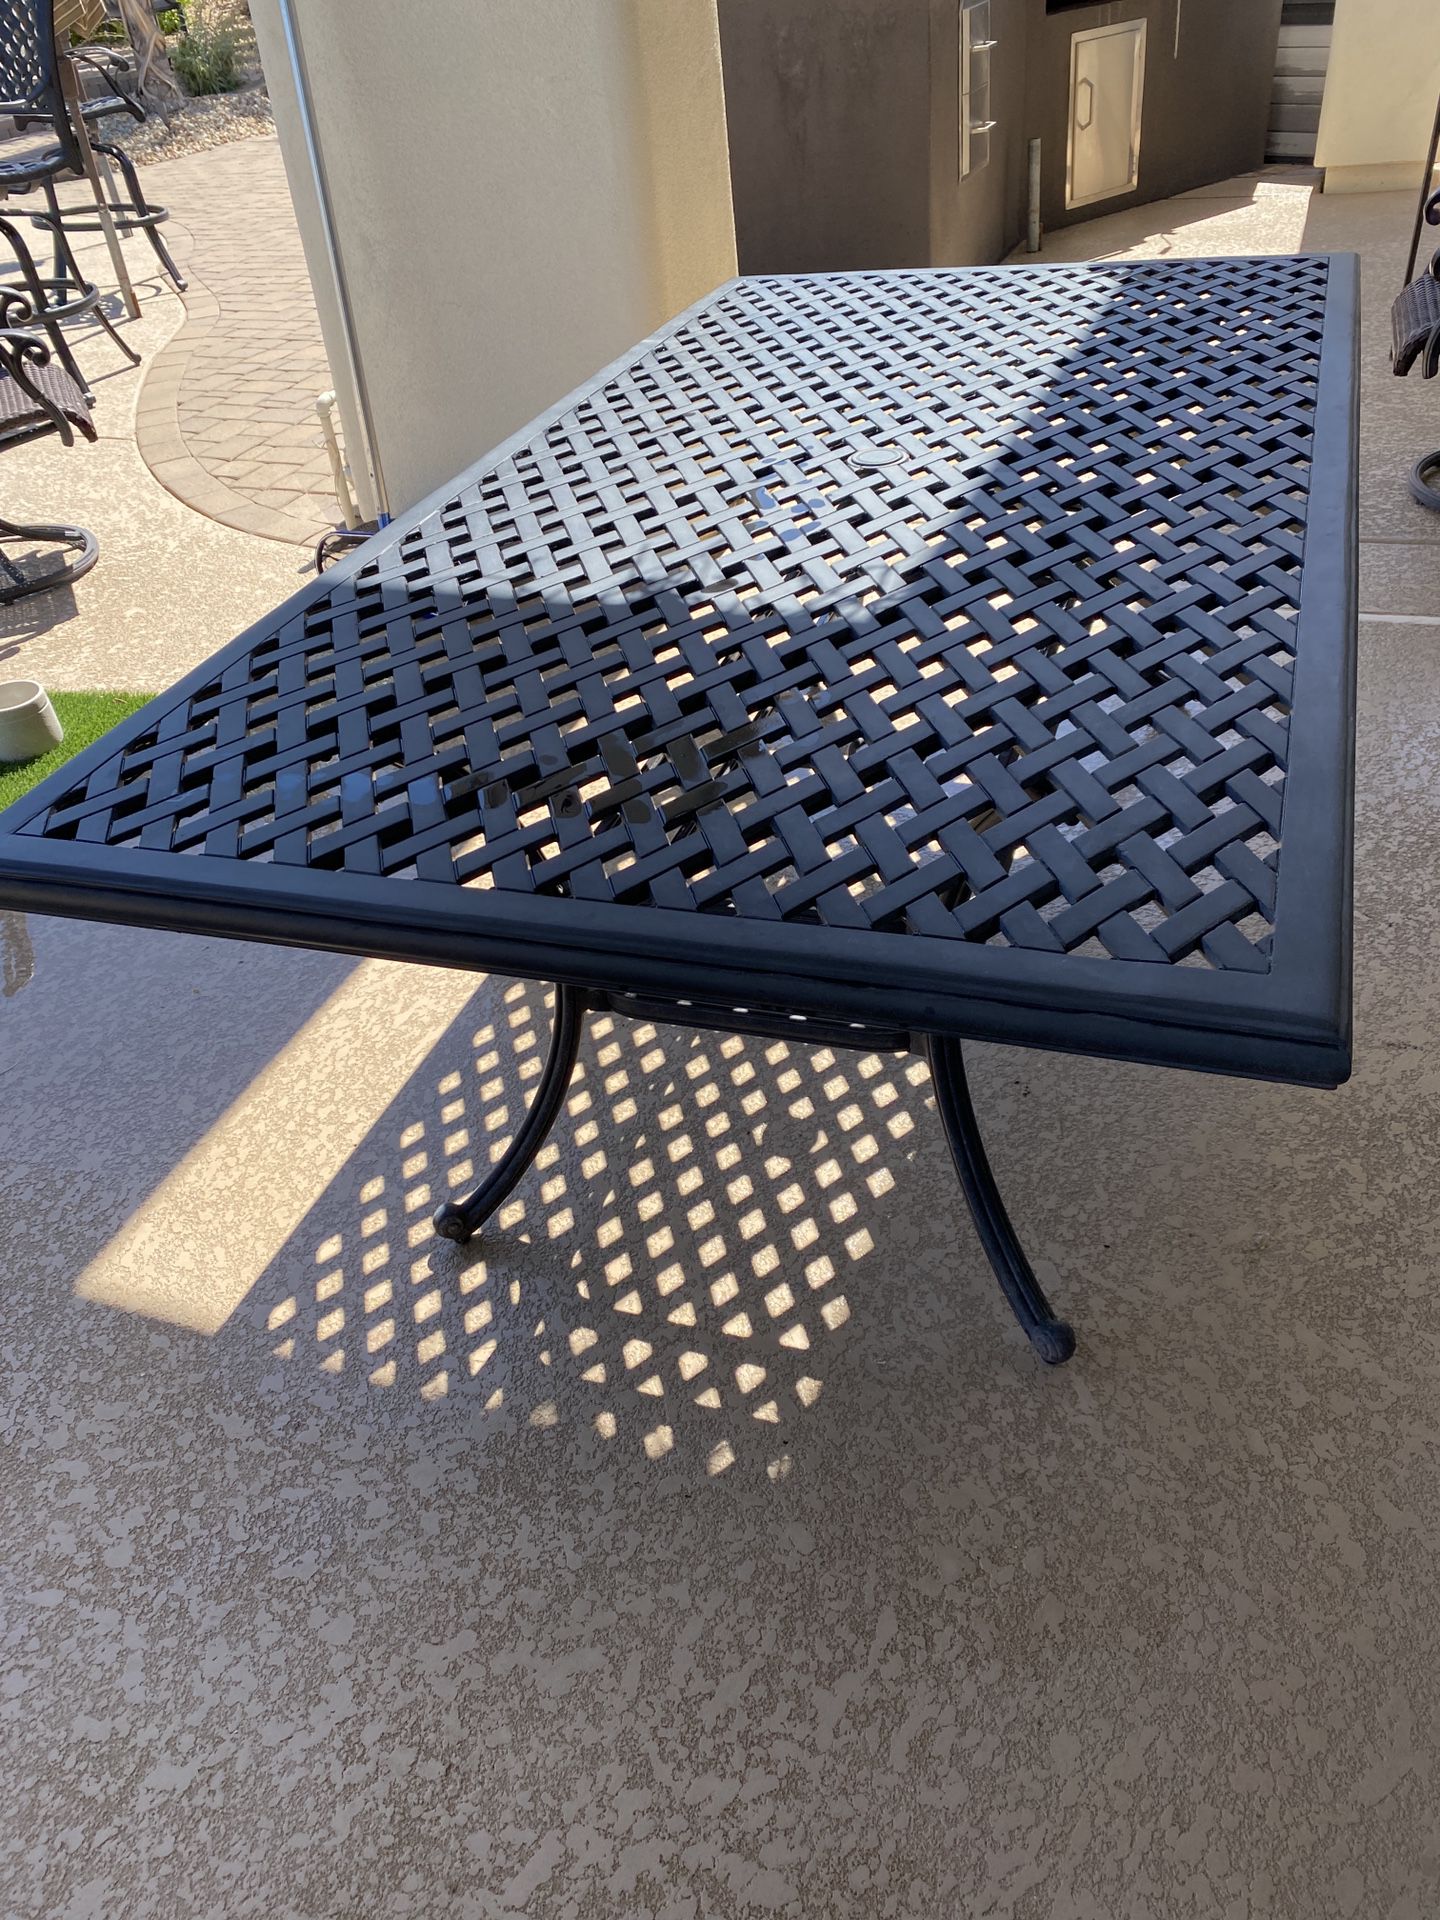 Outdoor Wrought Iron Patio Table